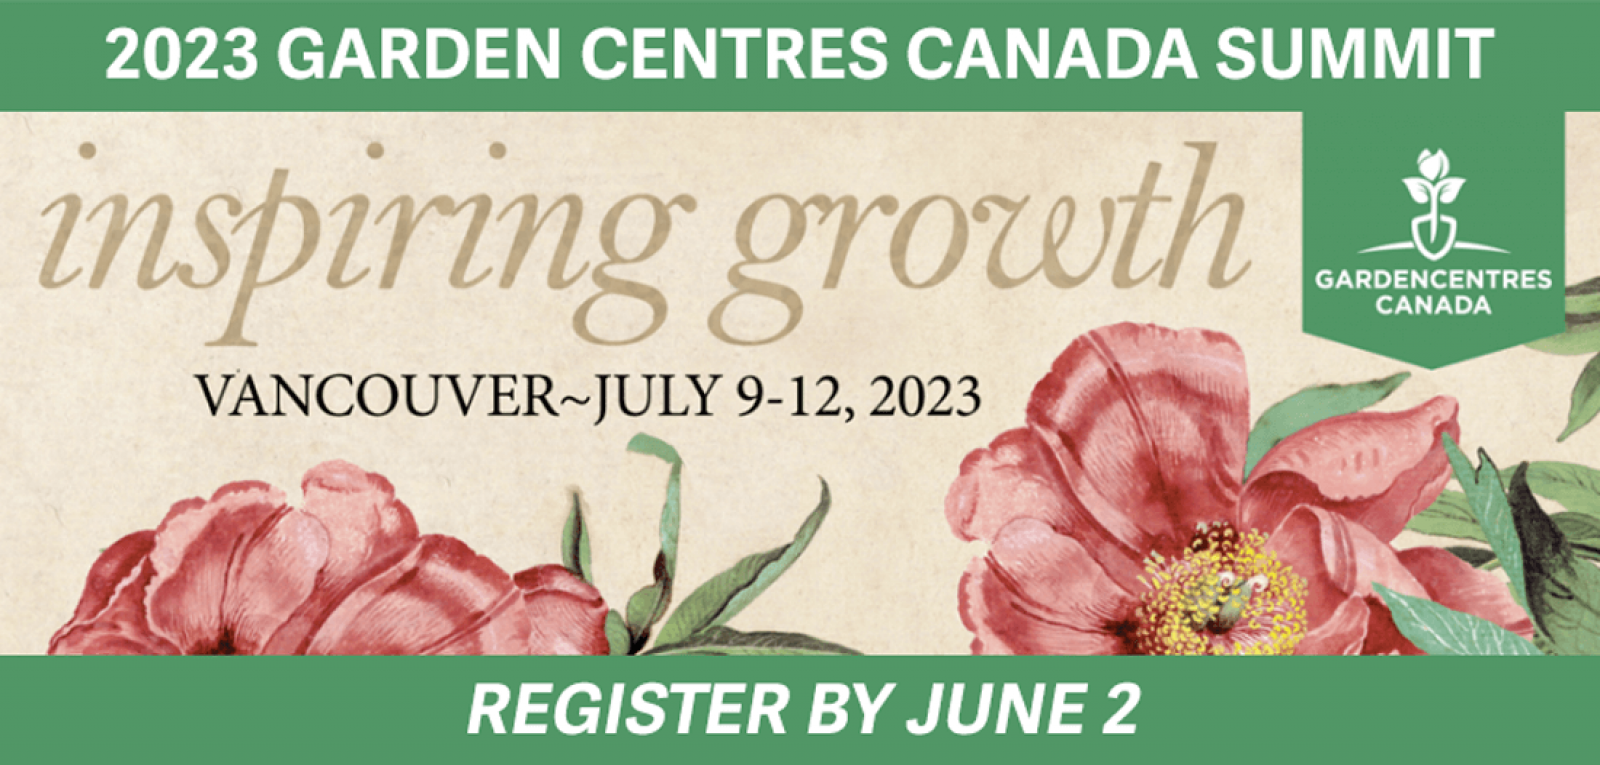 Garden Centres Canada Summit 2023